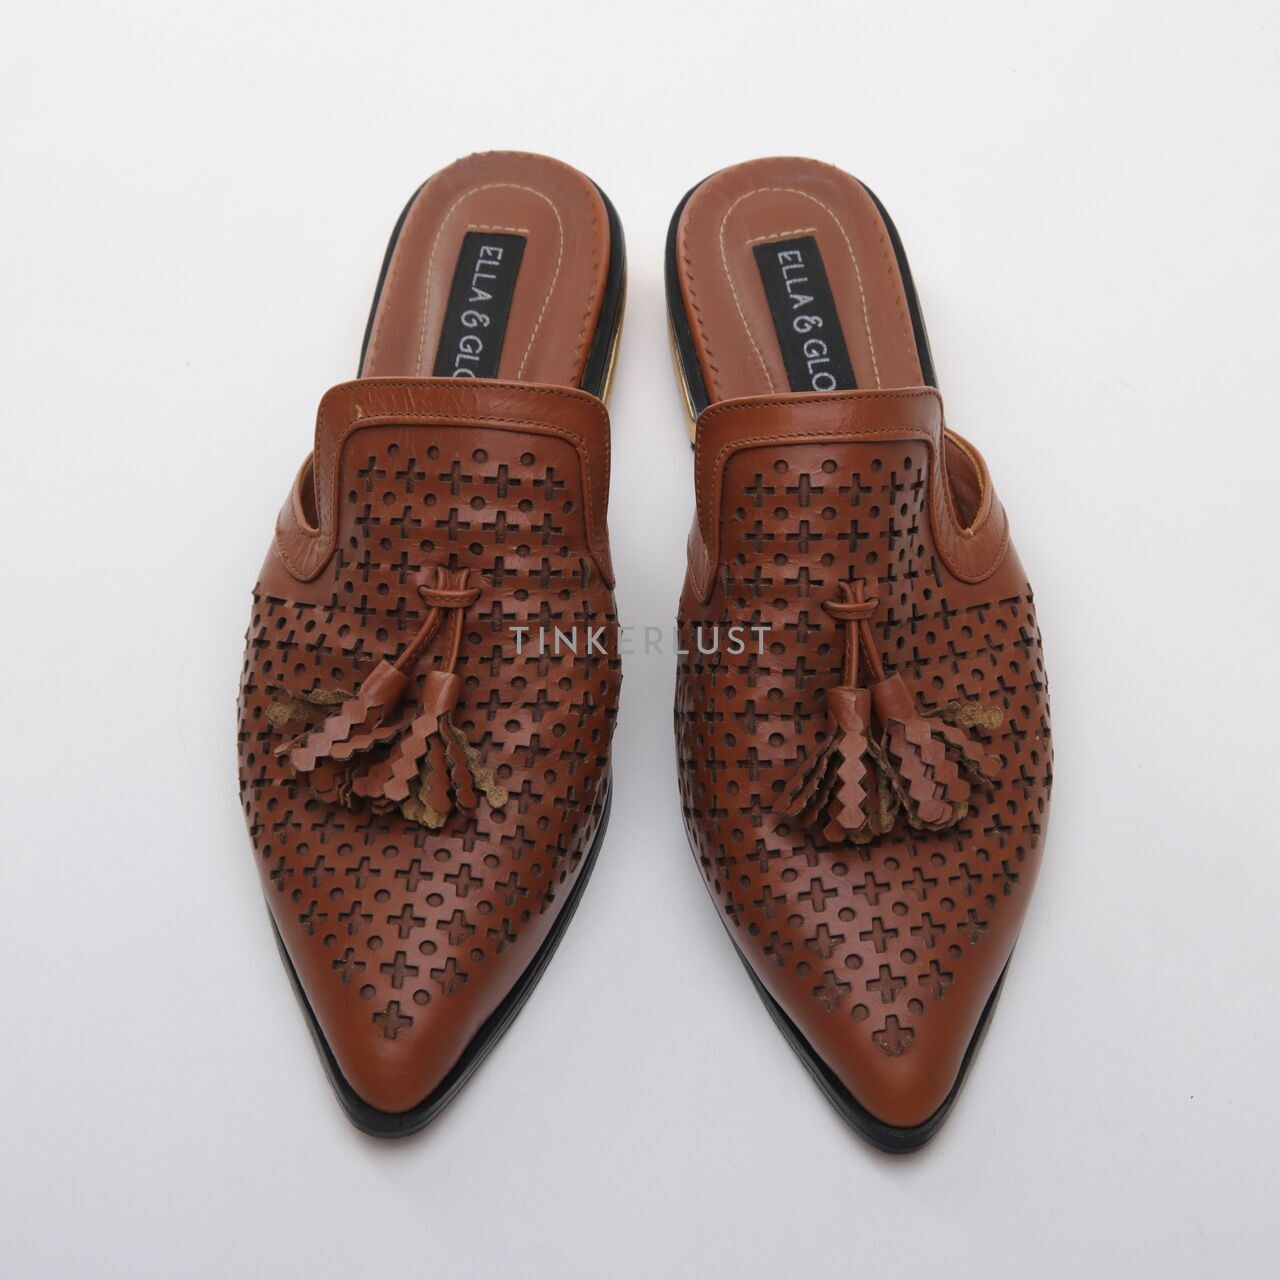 Ella & Glo Brown Mules Sandals